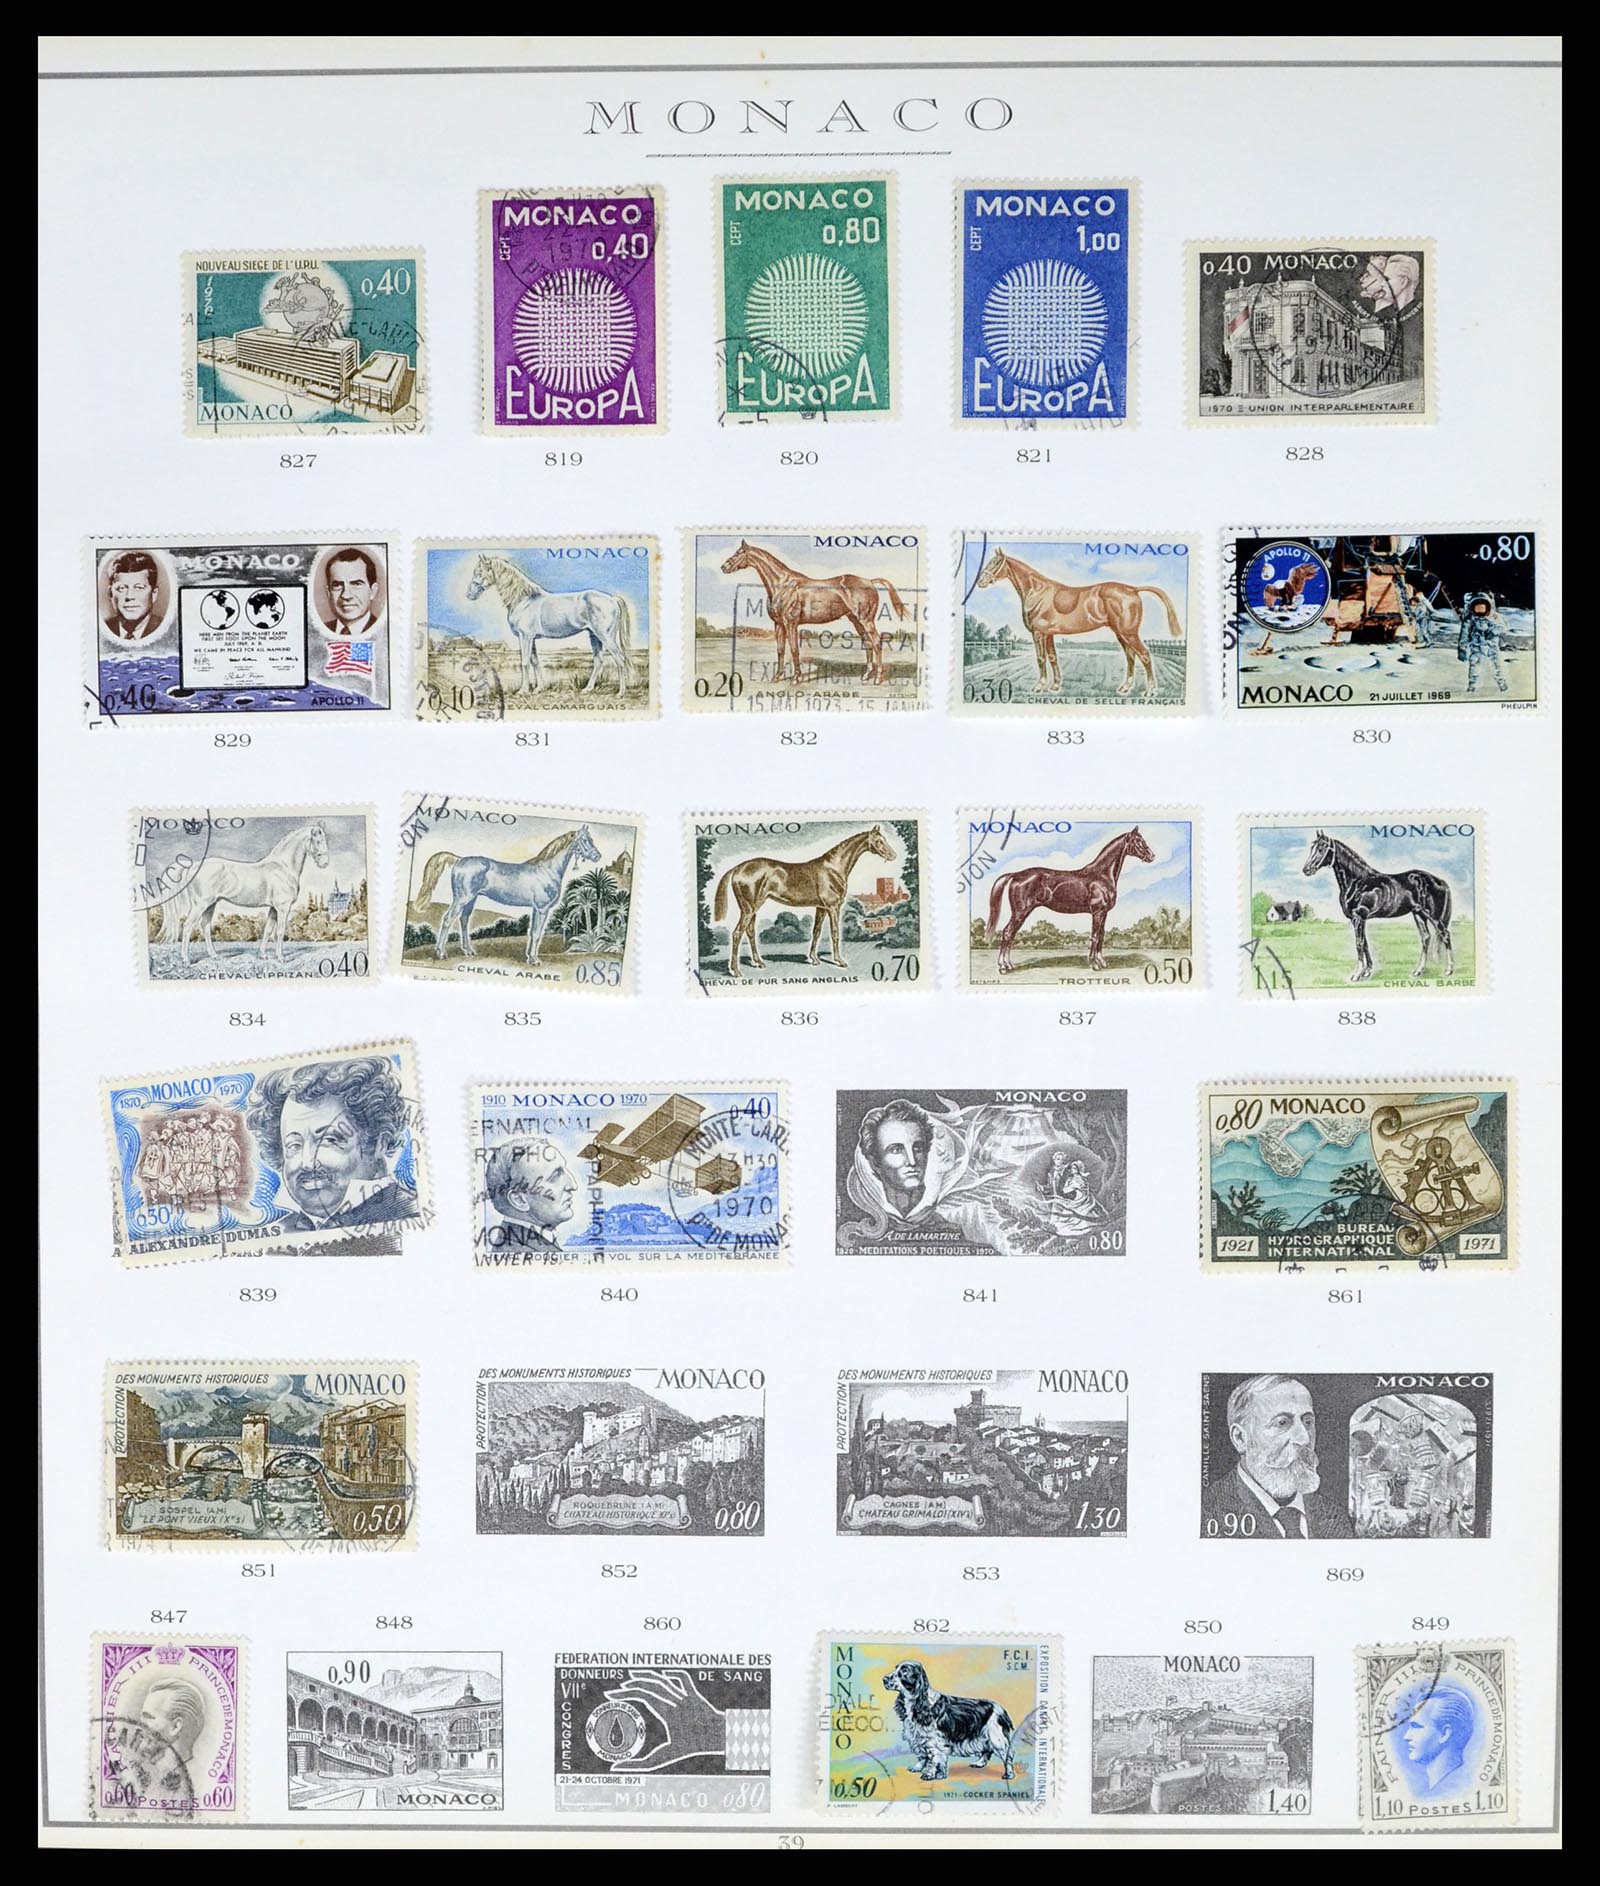 37437 076 - Stamp collection 37437 Monaco 1885-1996.